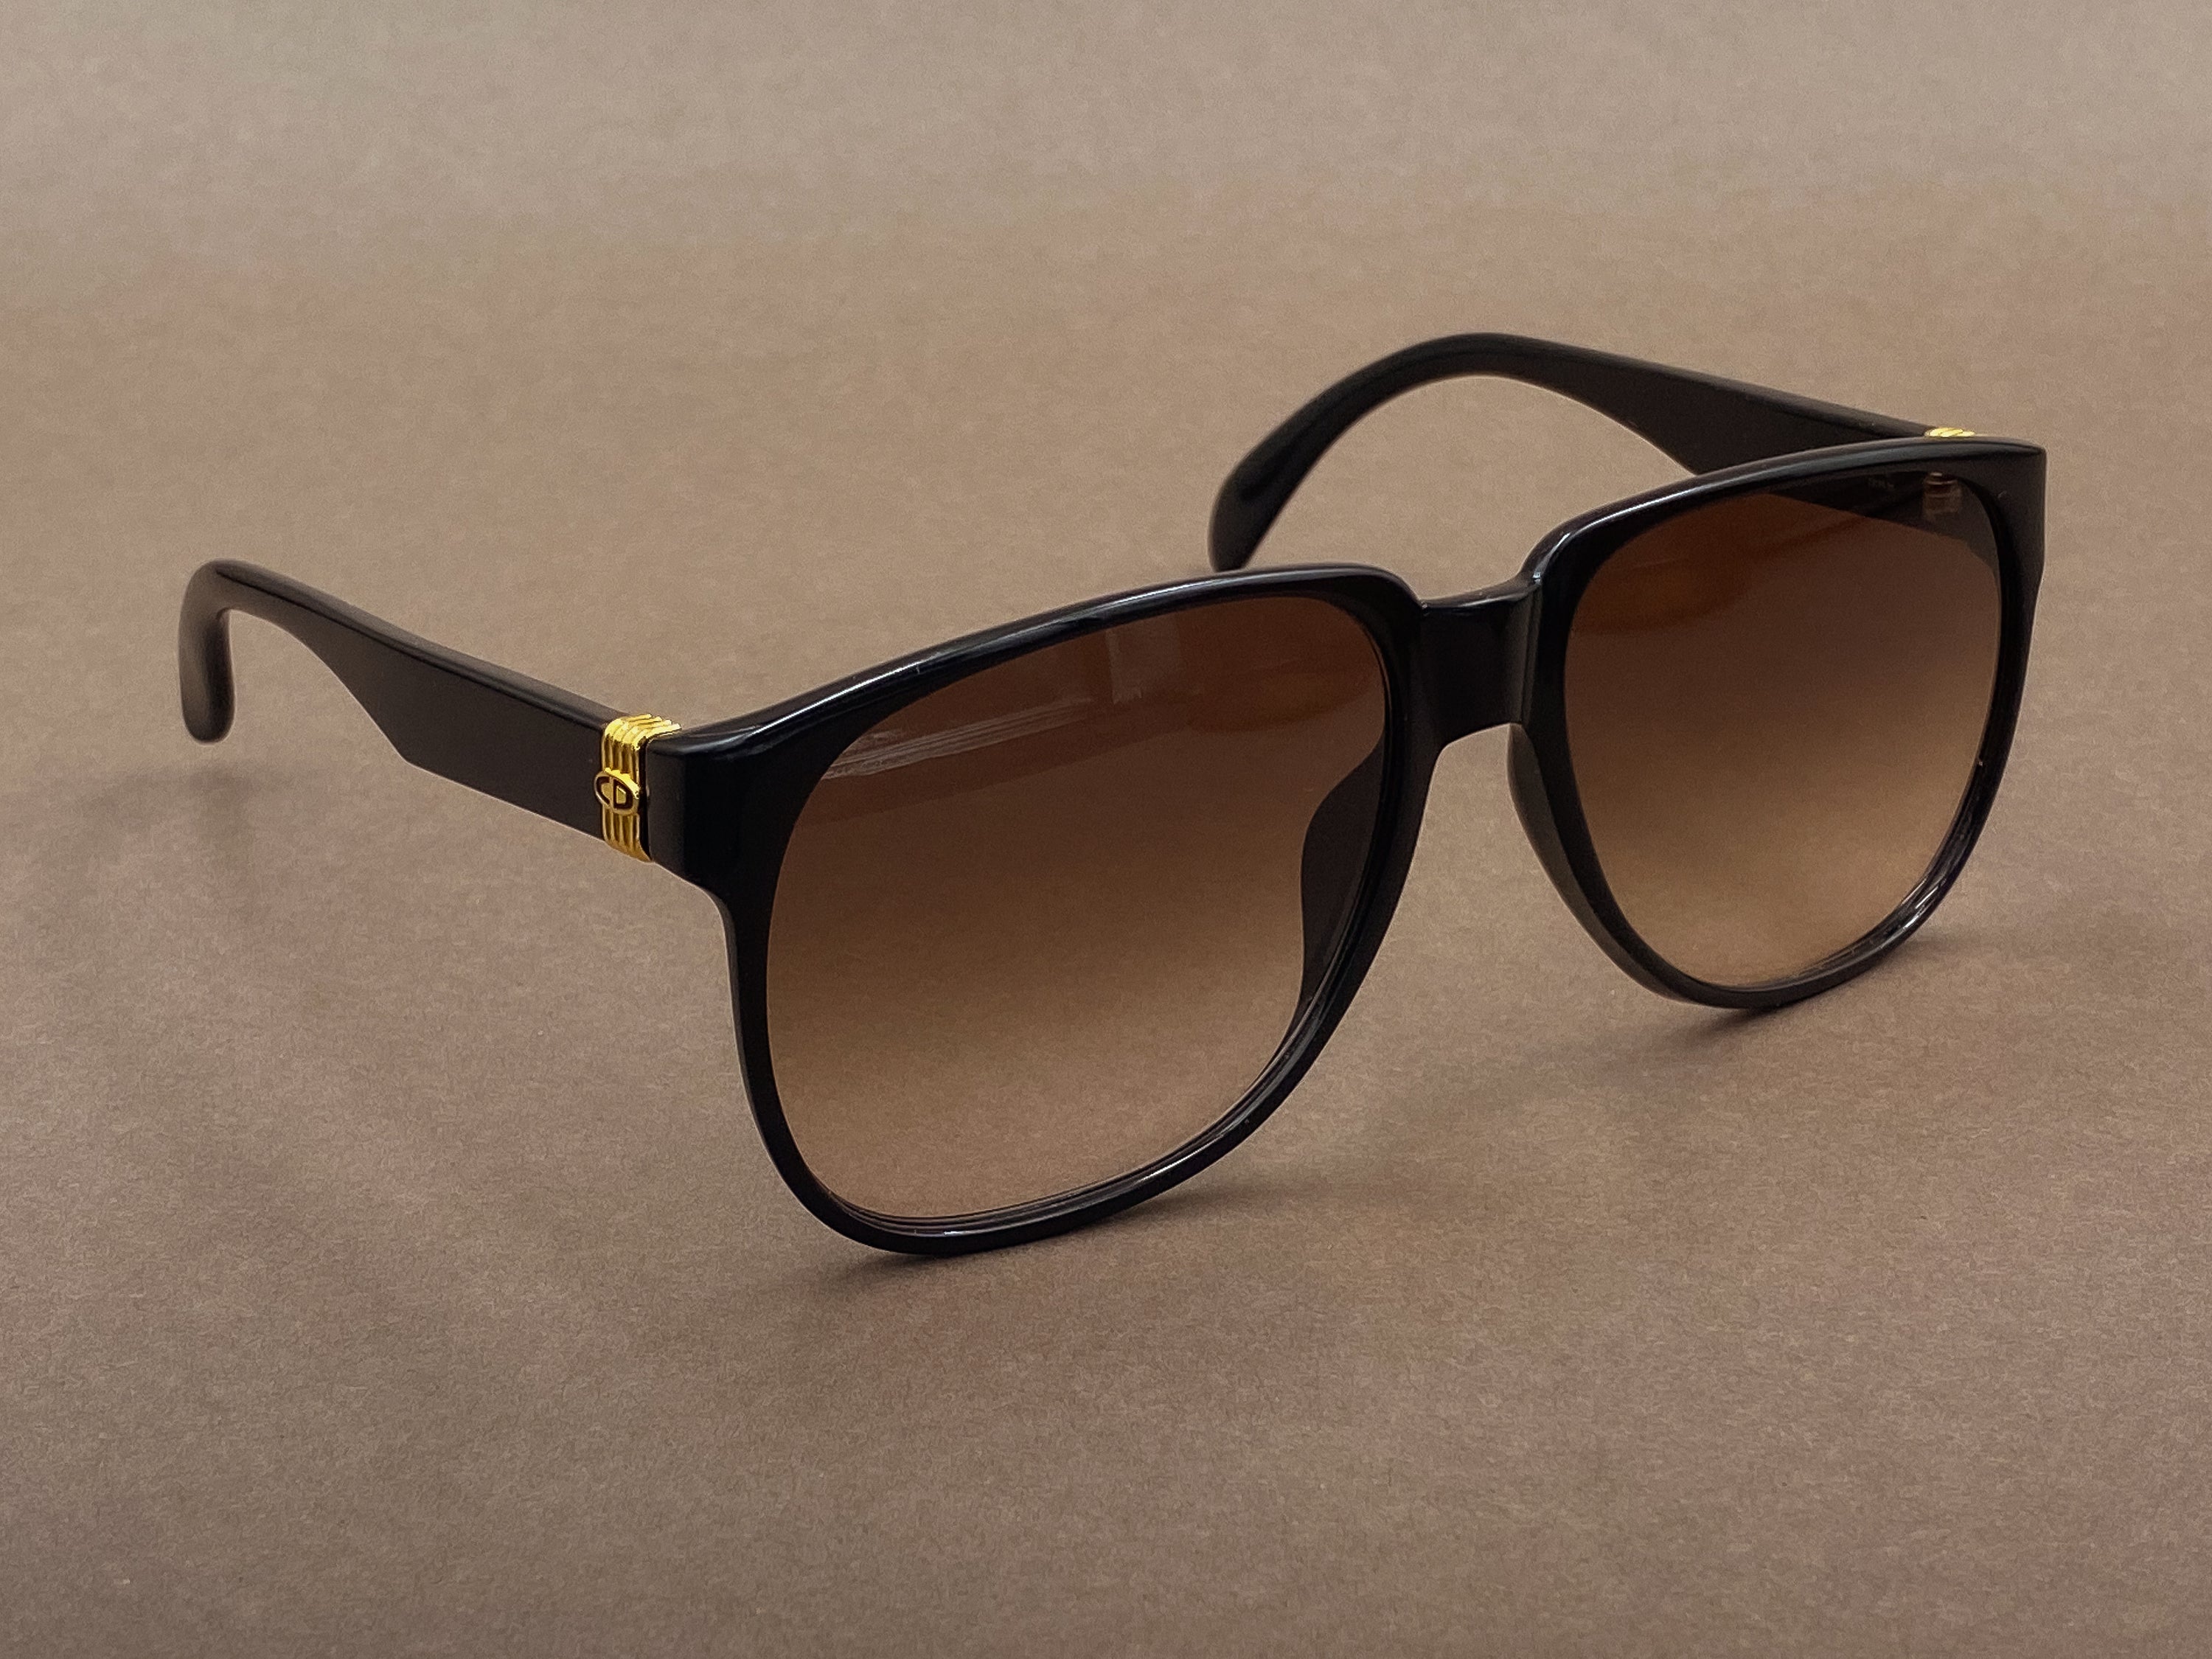 Christian Dior 2317 Monsieur sunglasses